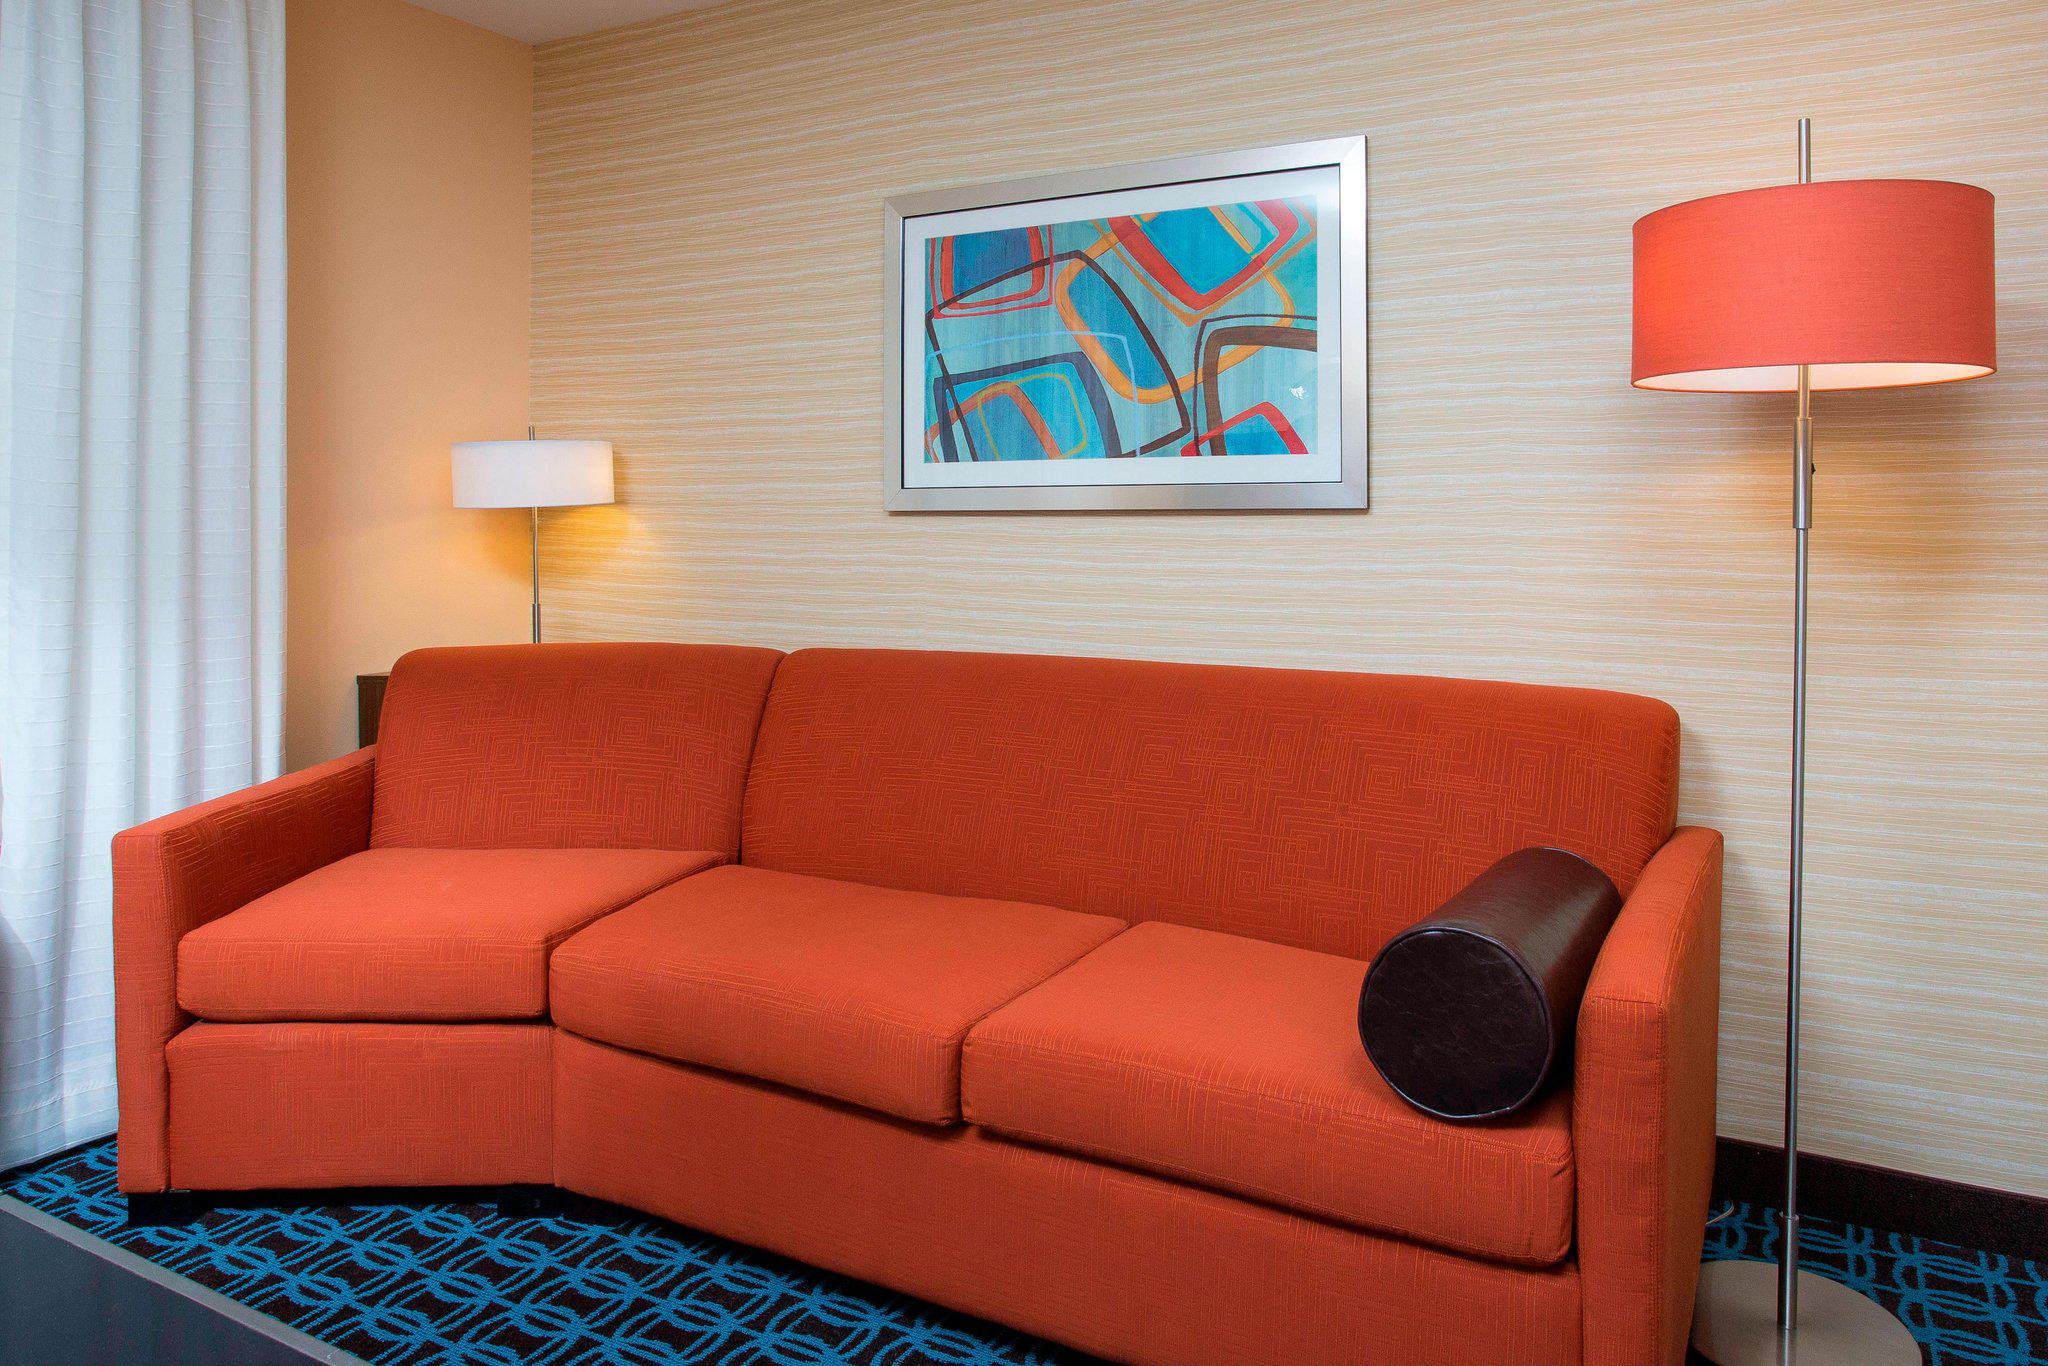 Fairfield Inn & Suites by Marriott Sioux Falls Airport Photo